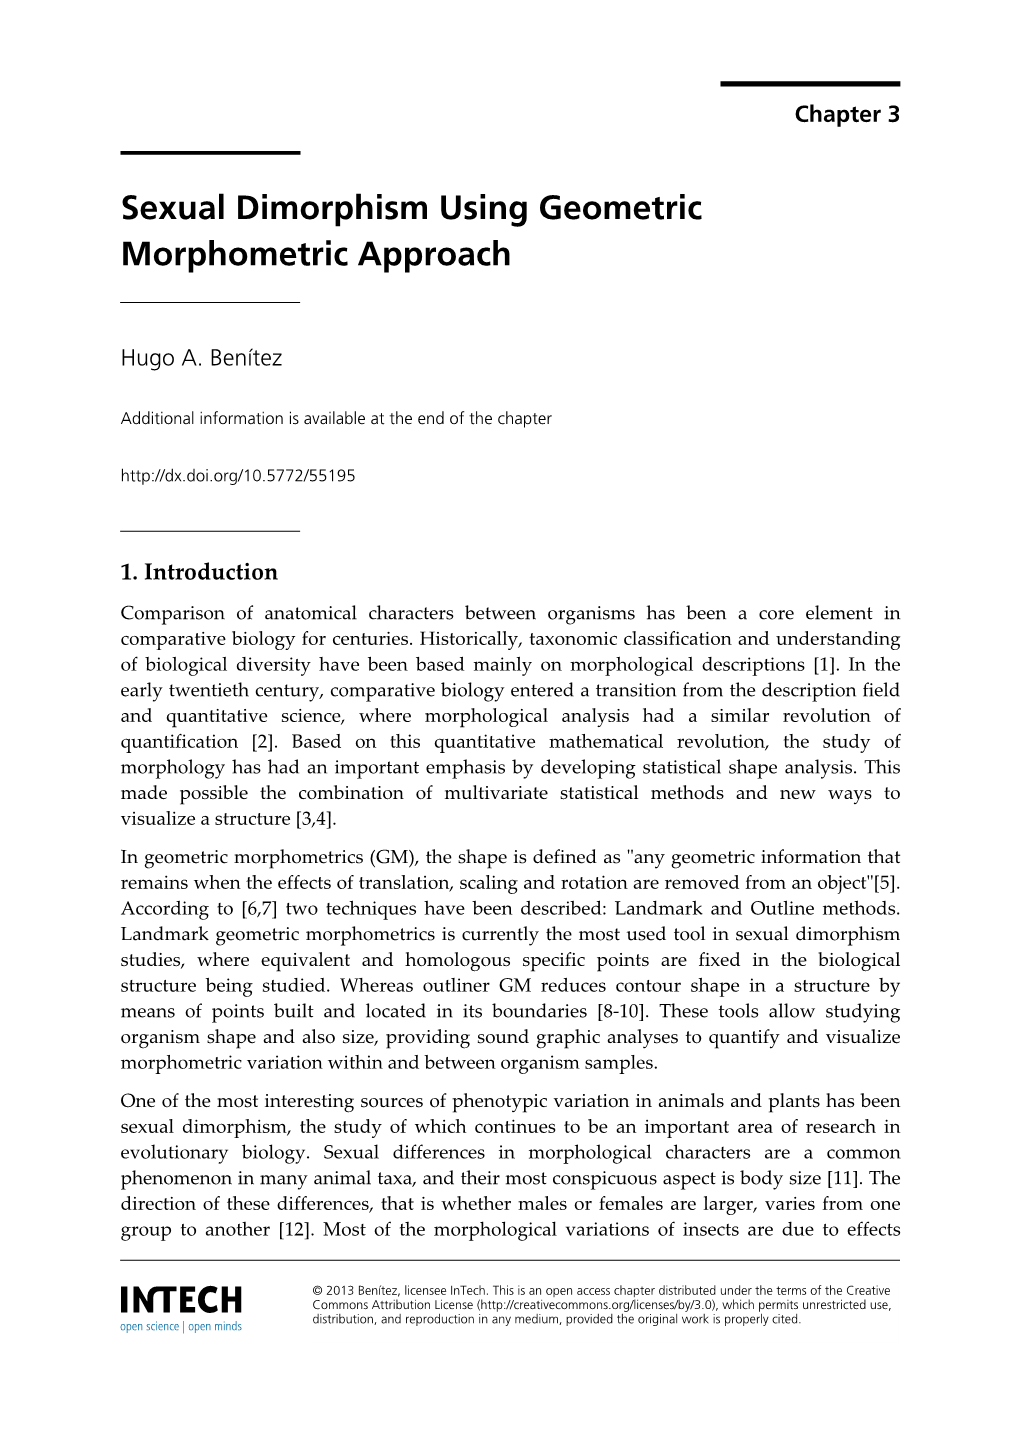 Sexual Dimorphism Using Geometric Morphometric Approach